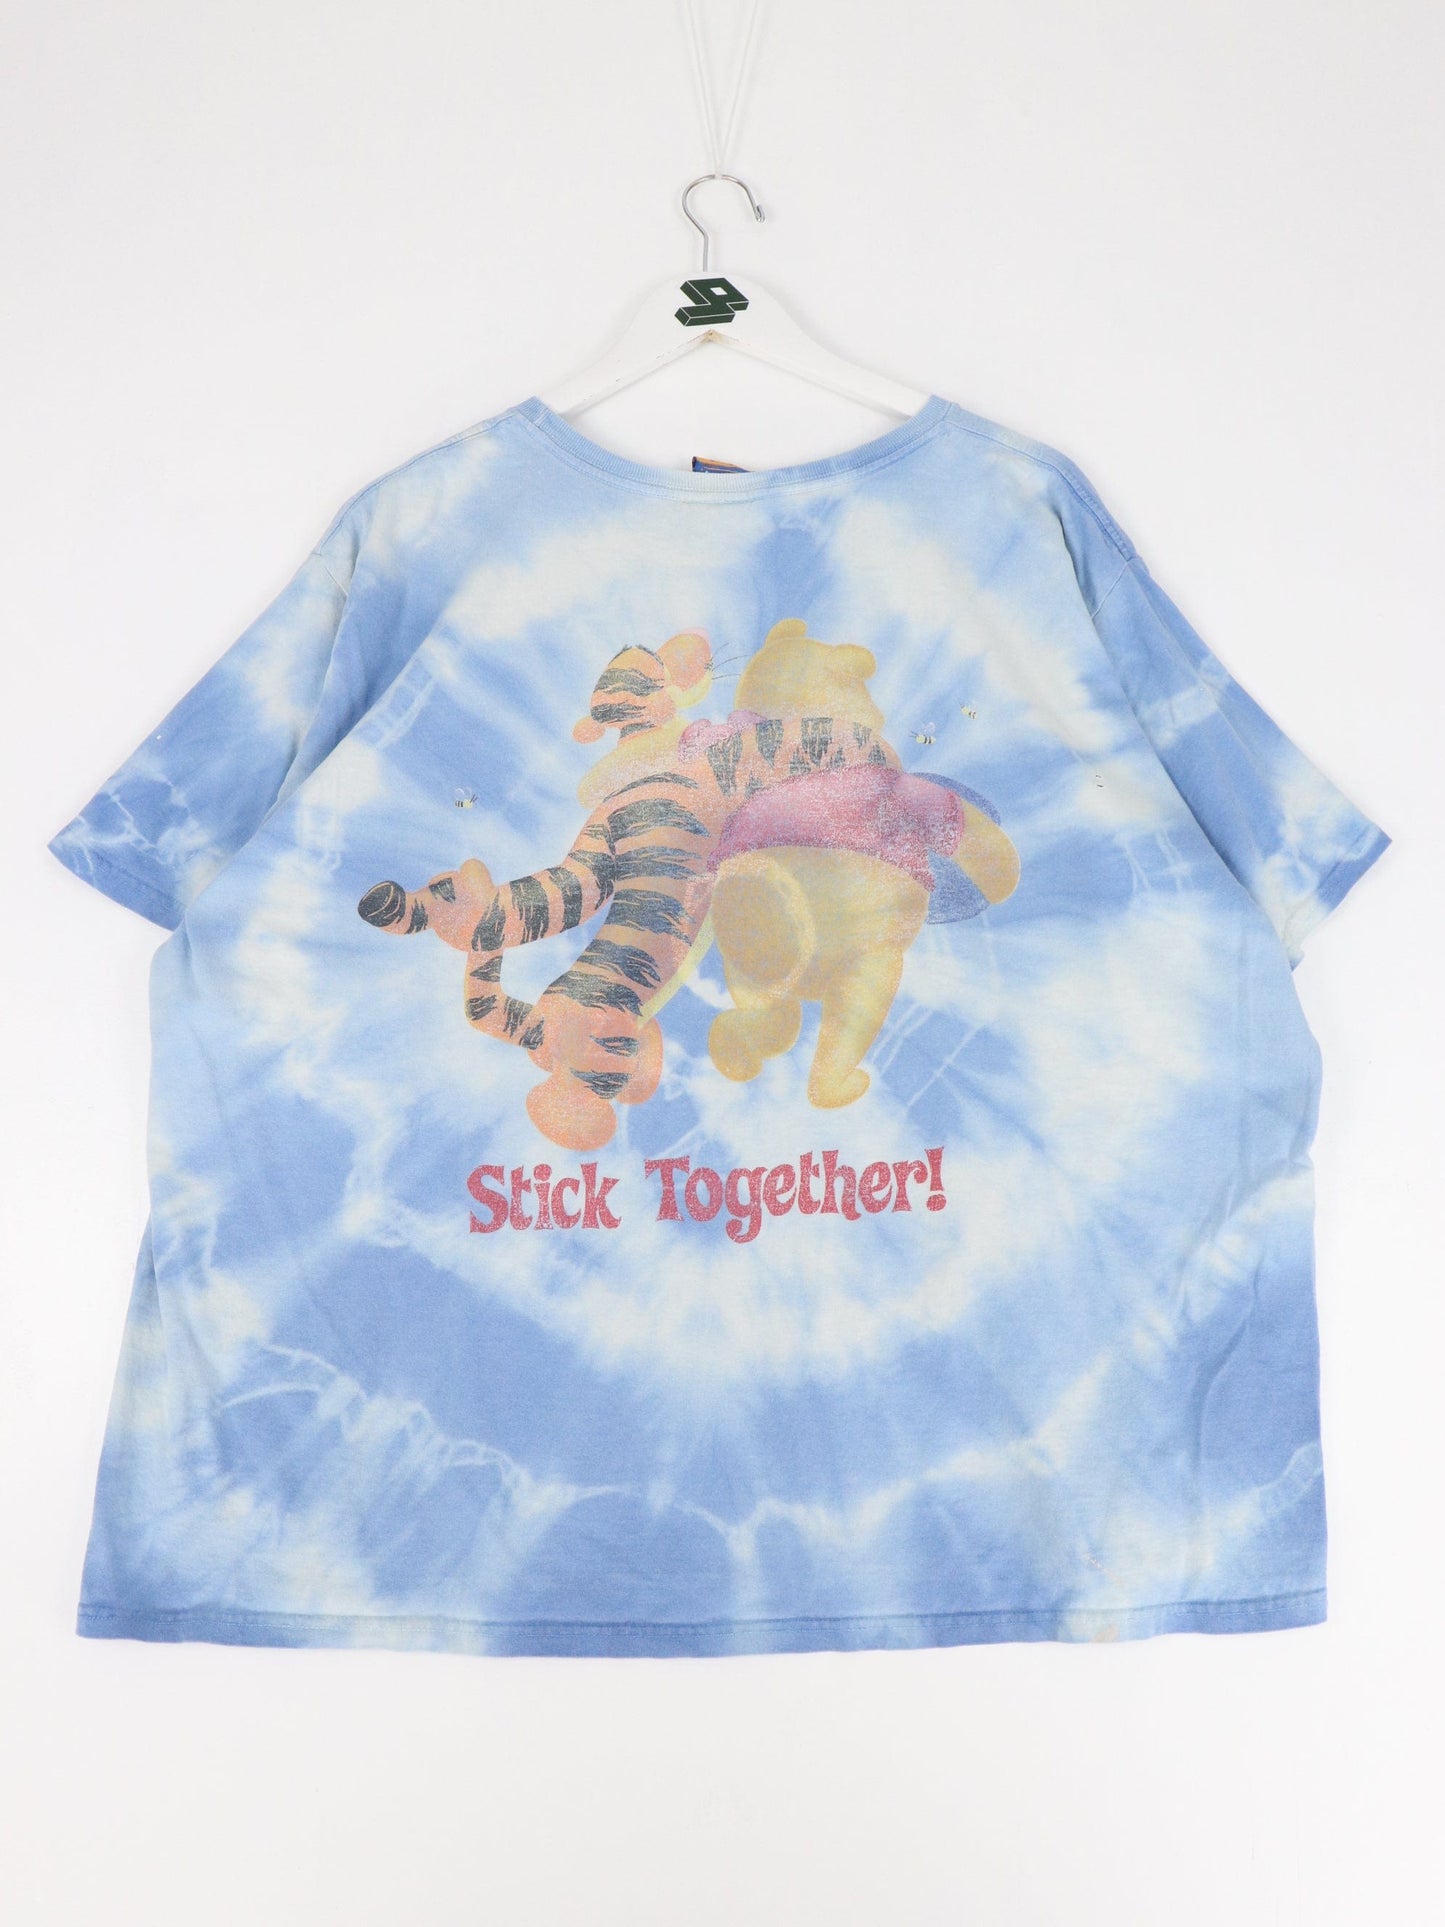 Other T Shirts & Tank Tops Vintage Disney T Shirt Womens 2X Blue Tie Dye Pooh Tigger Cartoon